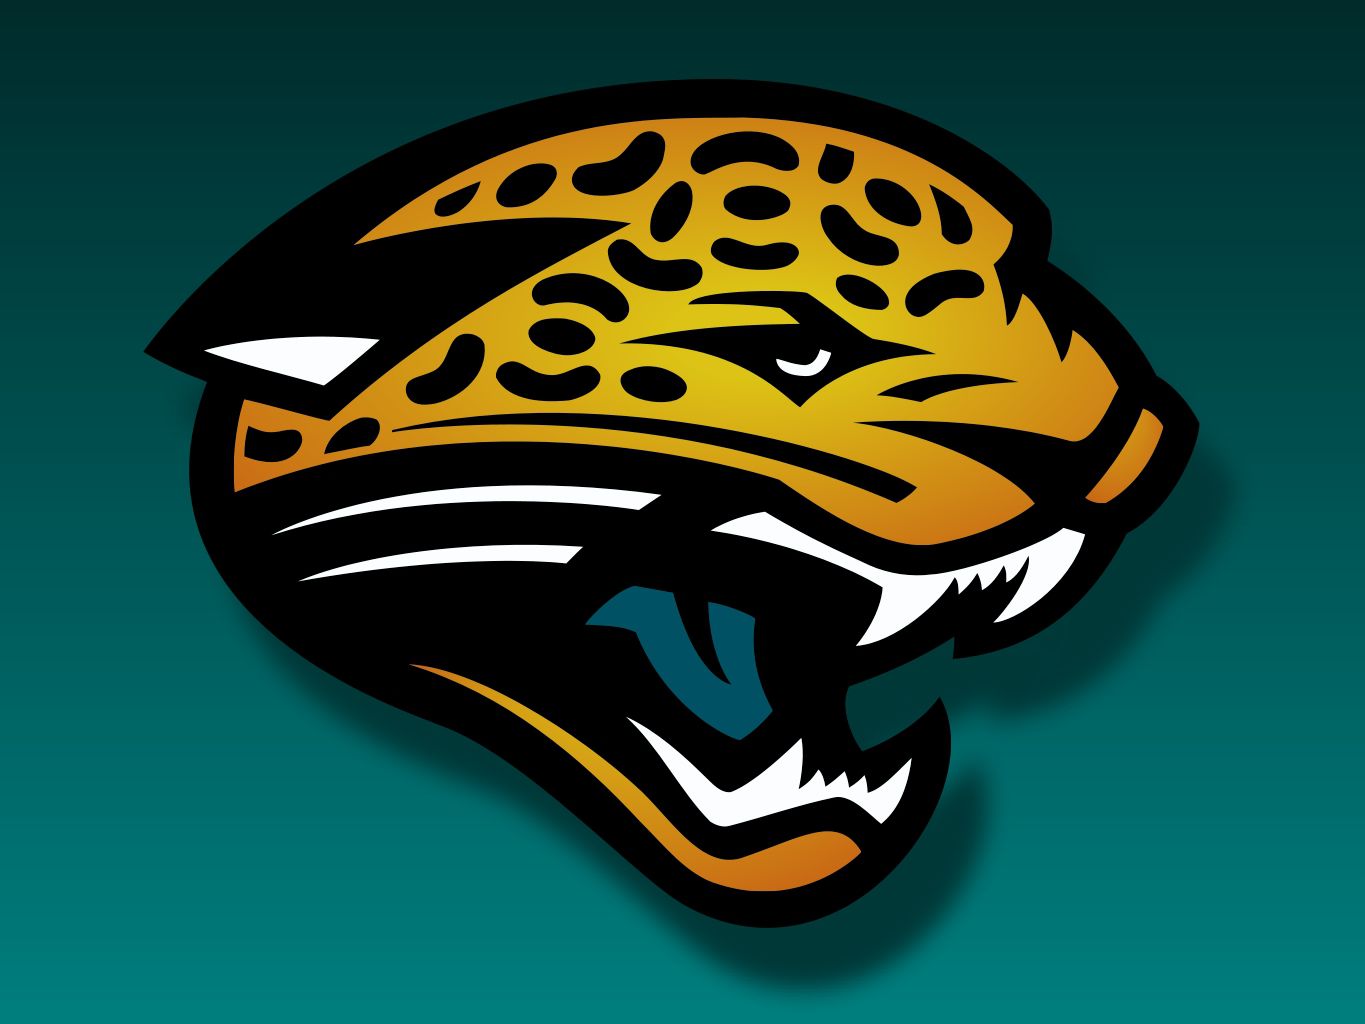 Descarga gratuita de fondo de pantalla para móvil de Jaguares De Jacksonville, Deporte, Fútbol.